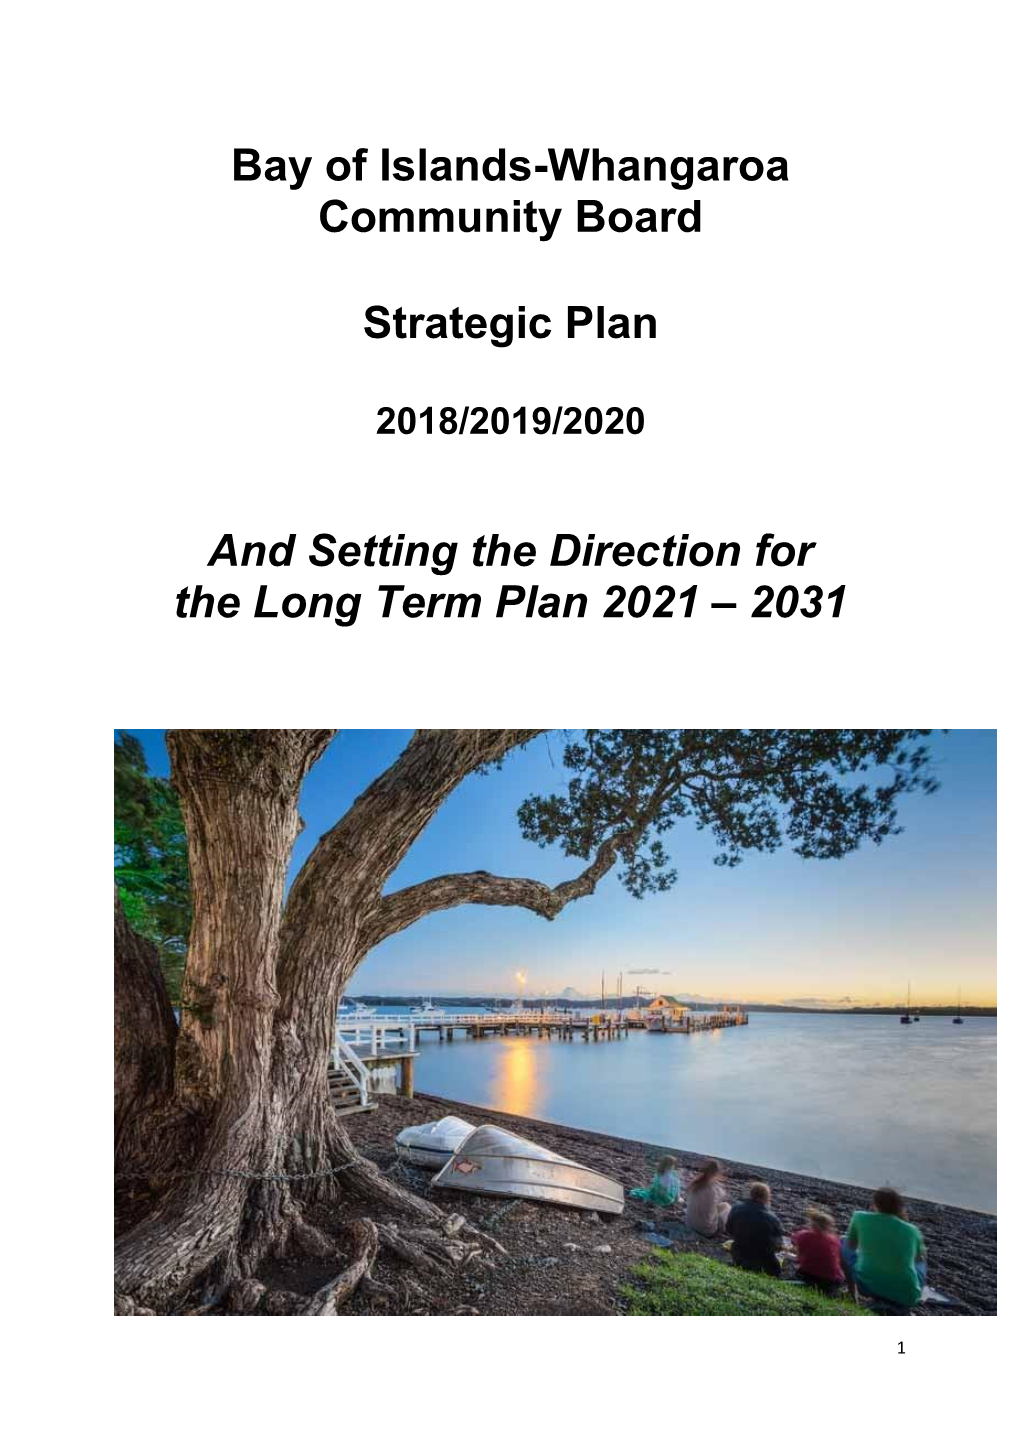 Bay of Islands-Whangaroa Community Board Strategic Plan